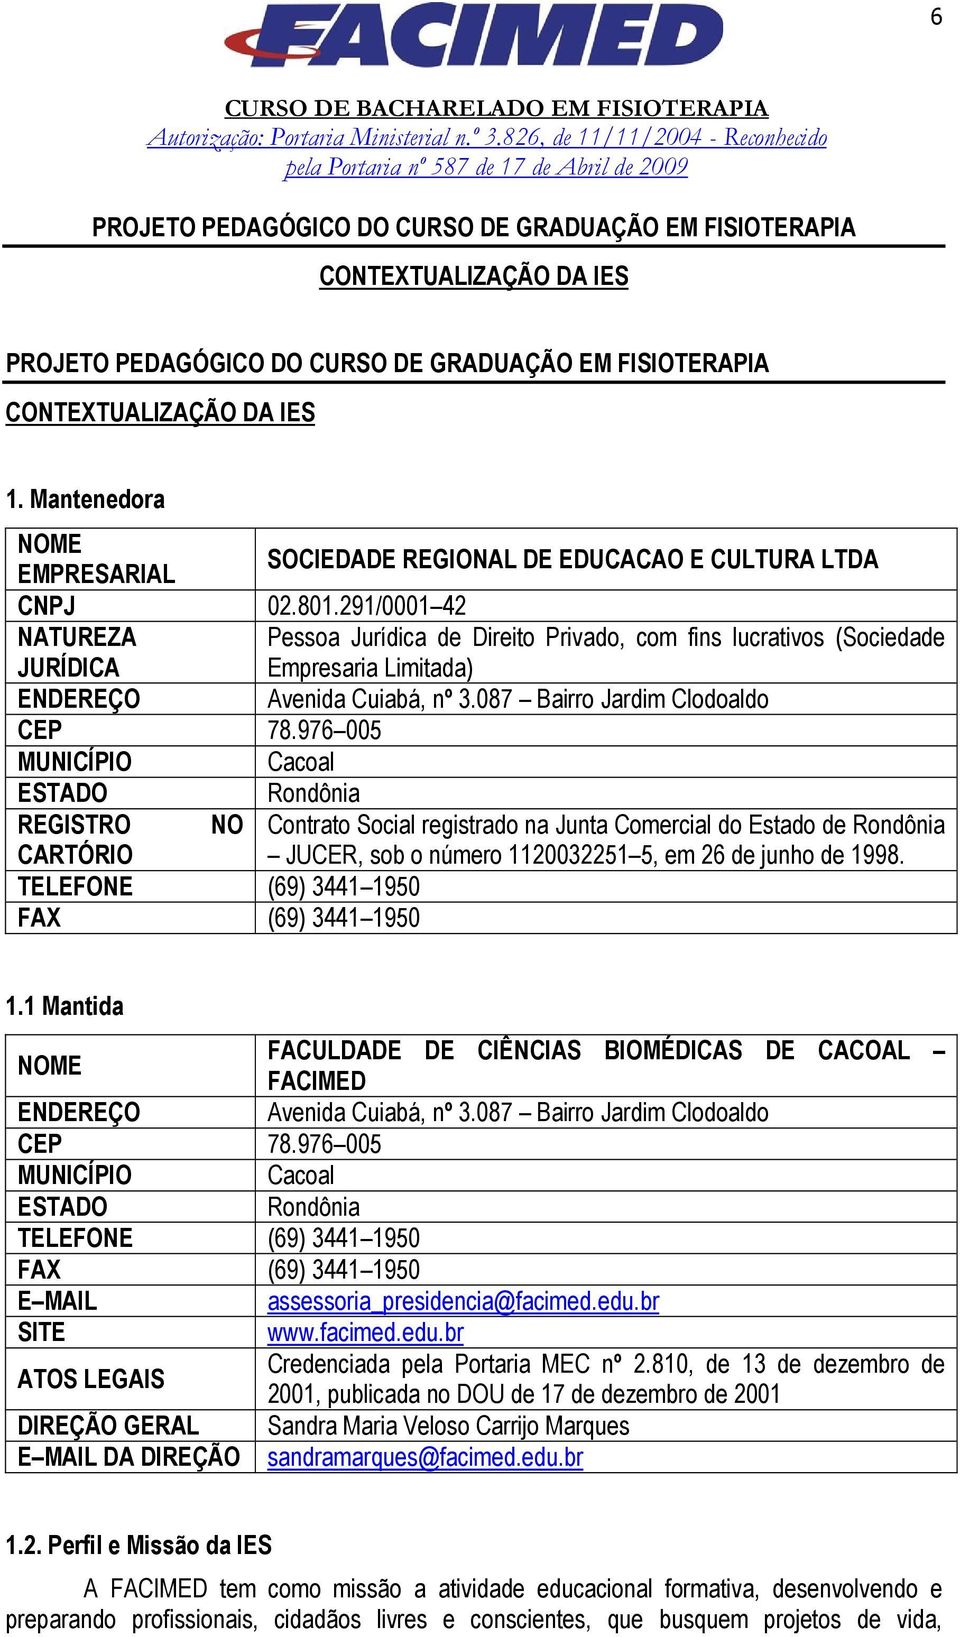 1. Mantenedora NOME EMPRESARIAL SOCIEDADE REGIONAL DE EDUCACAO E CULTURA LTDA CNPJ 02.801.